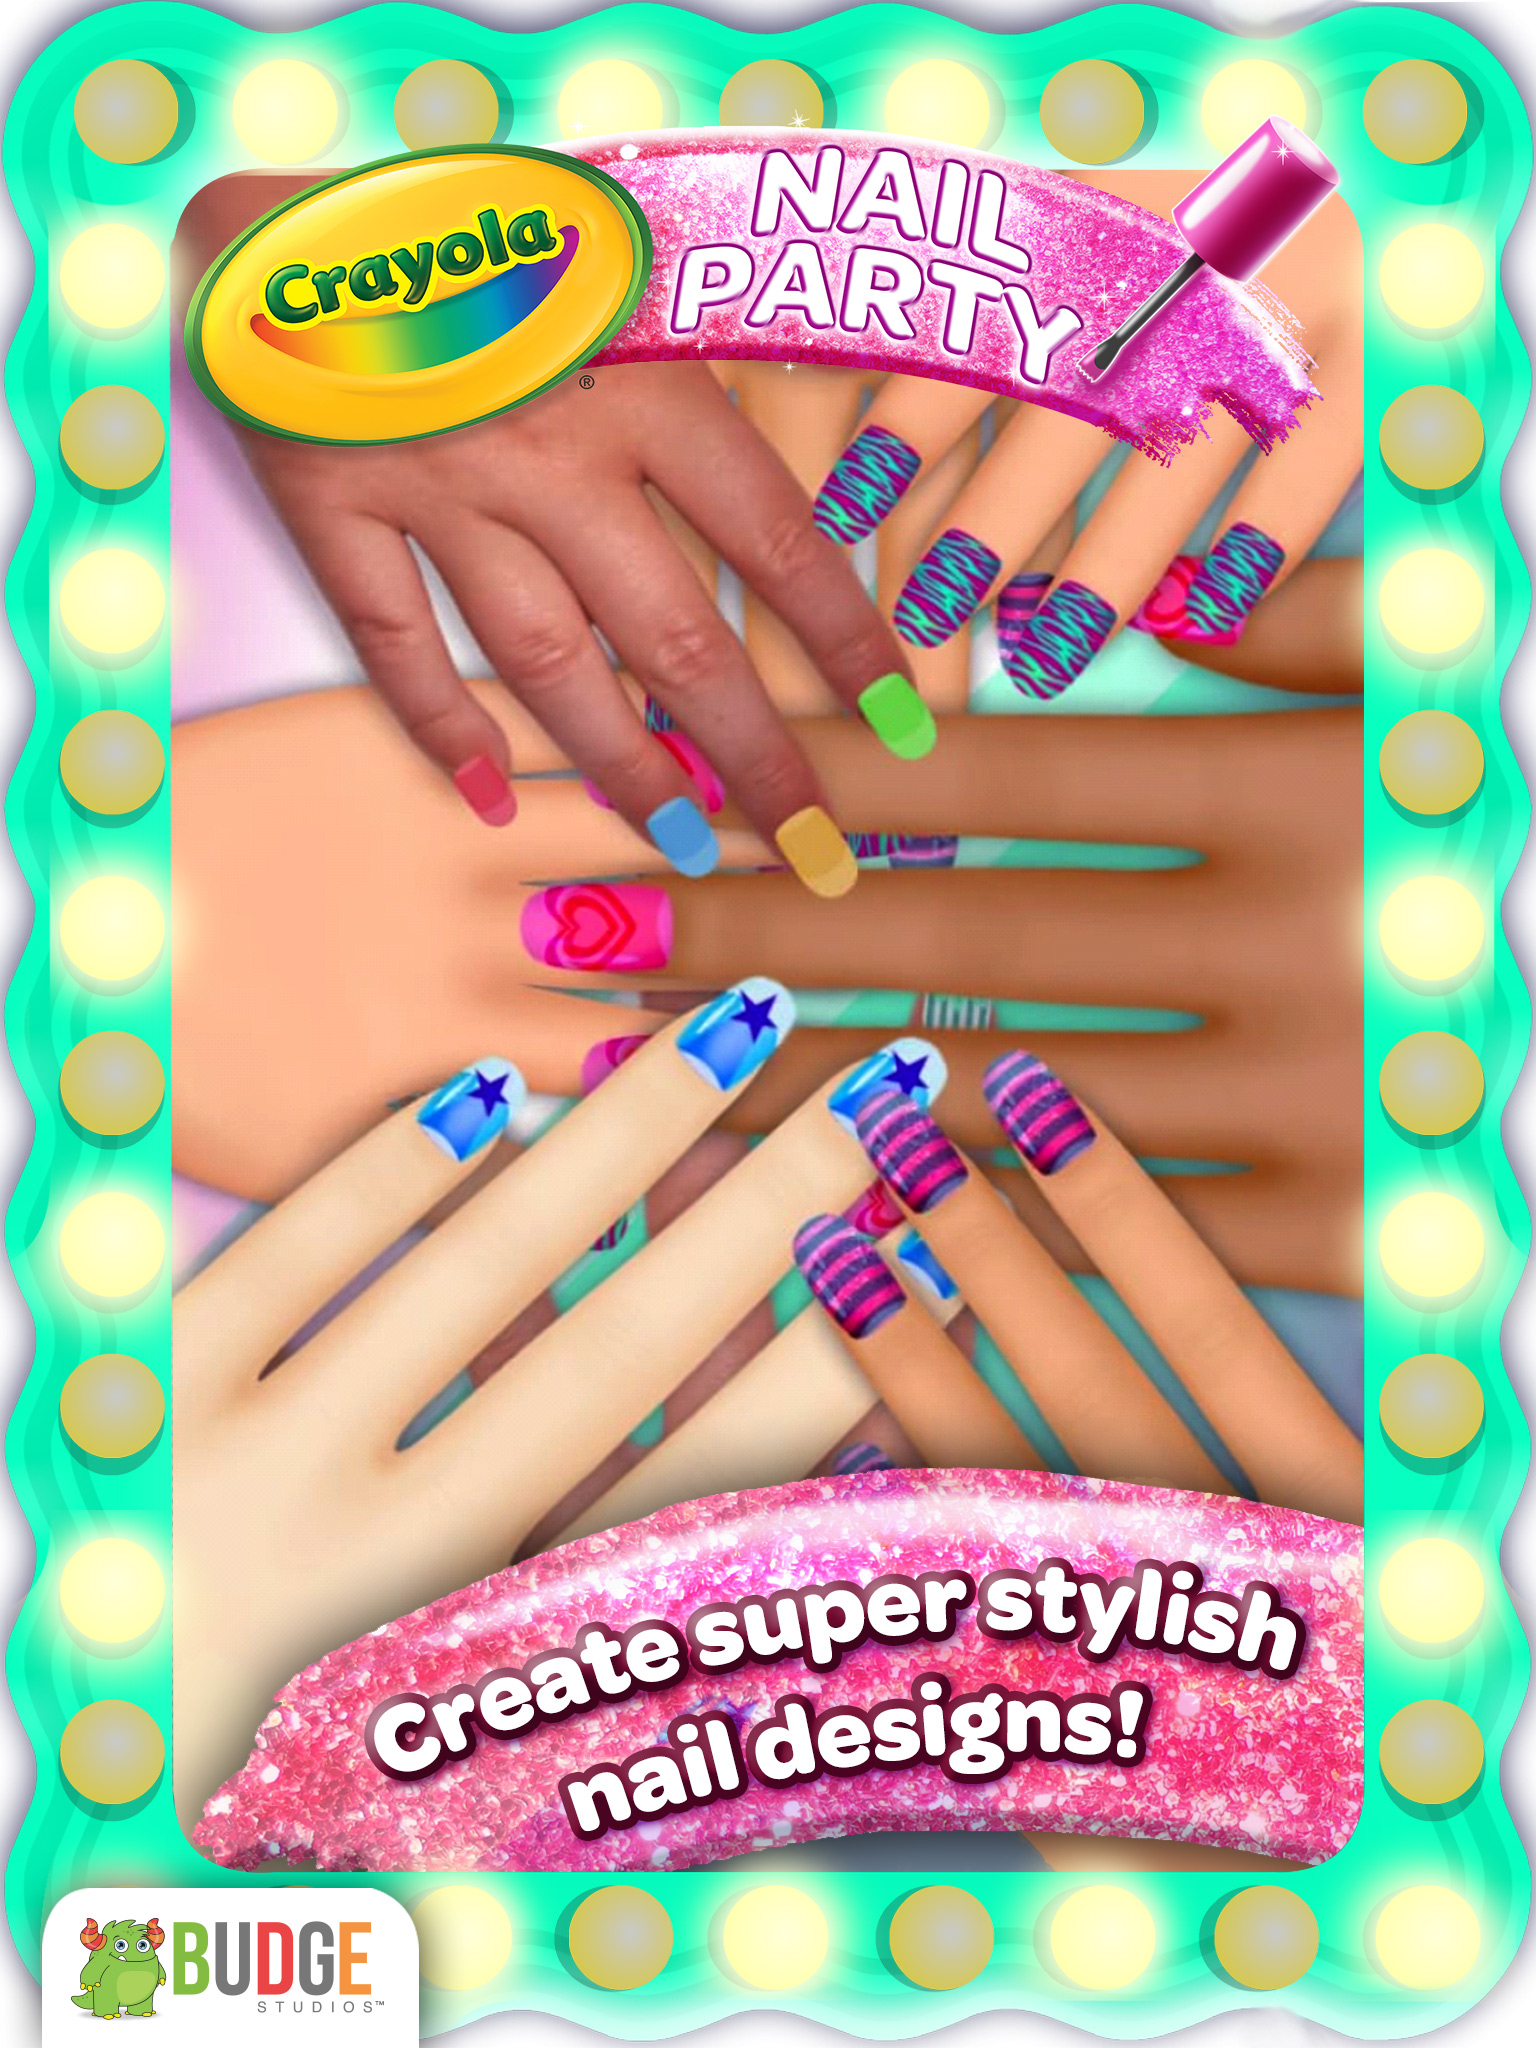 Create super stylish nail designs!